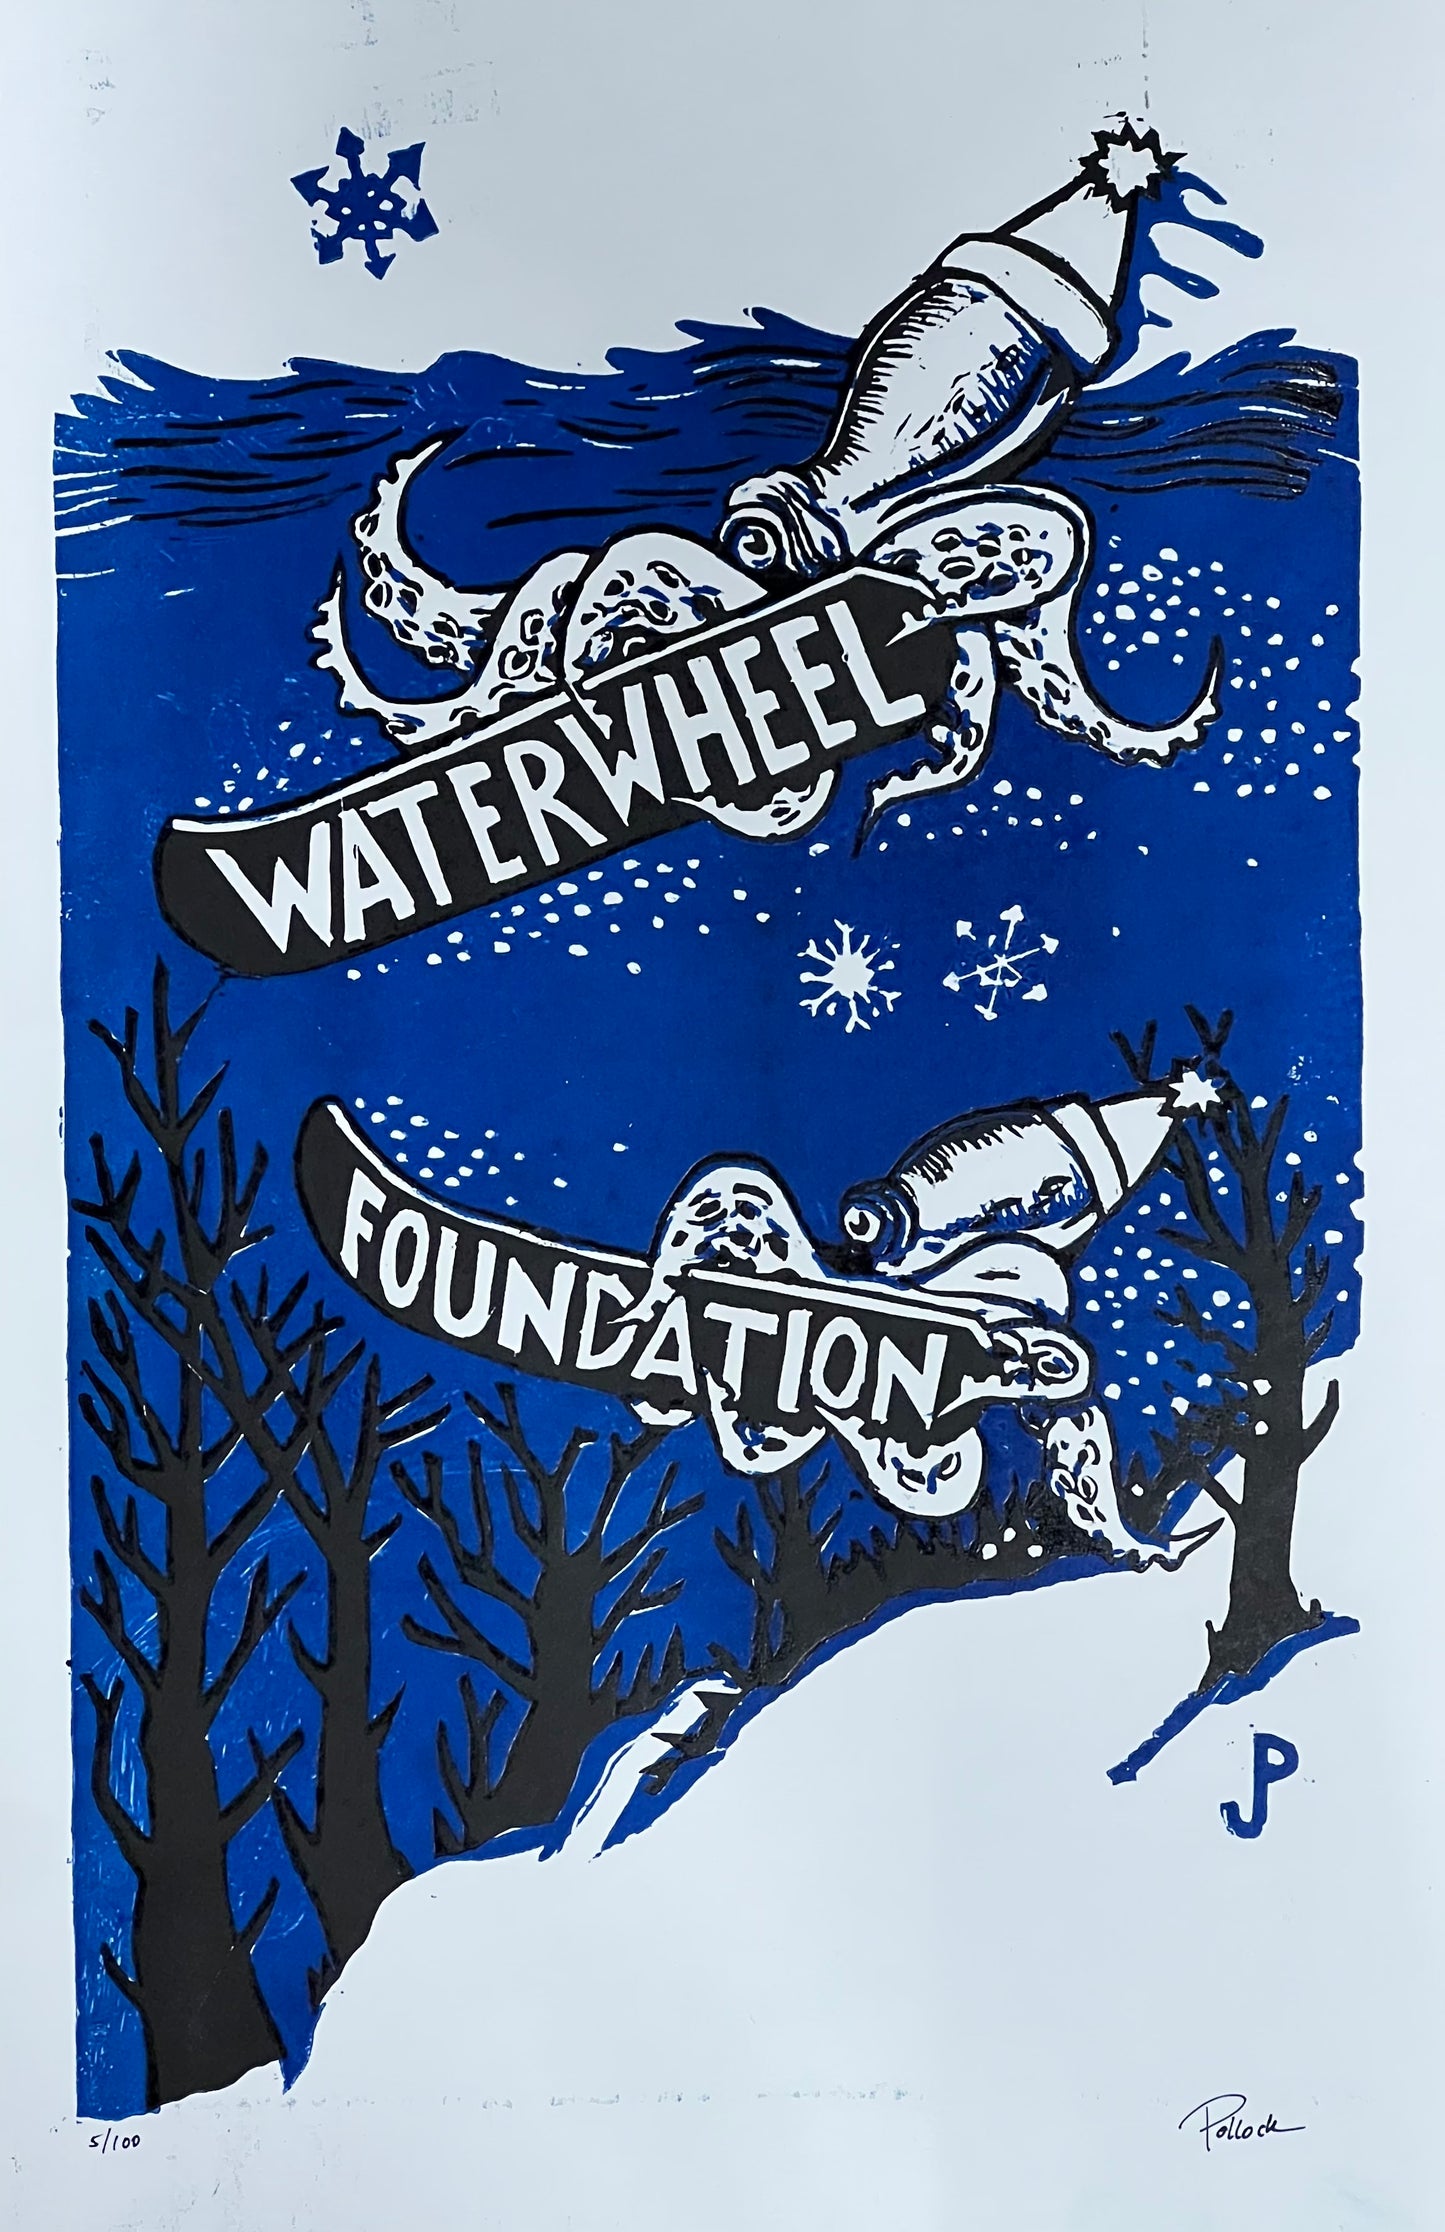 Jim Pollock "Waterwheel Foundation 2021" Charity Edition